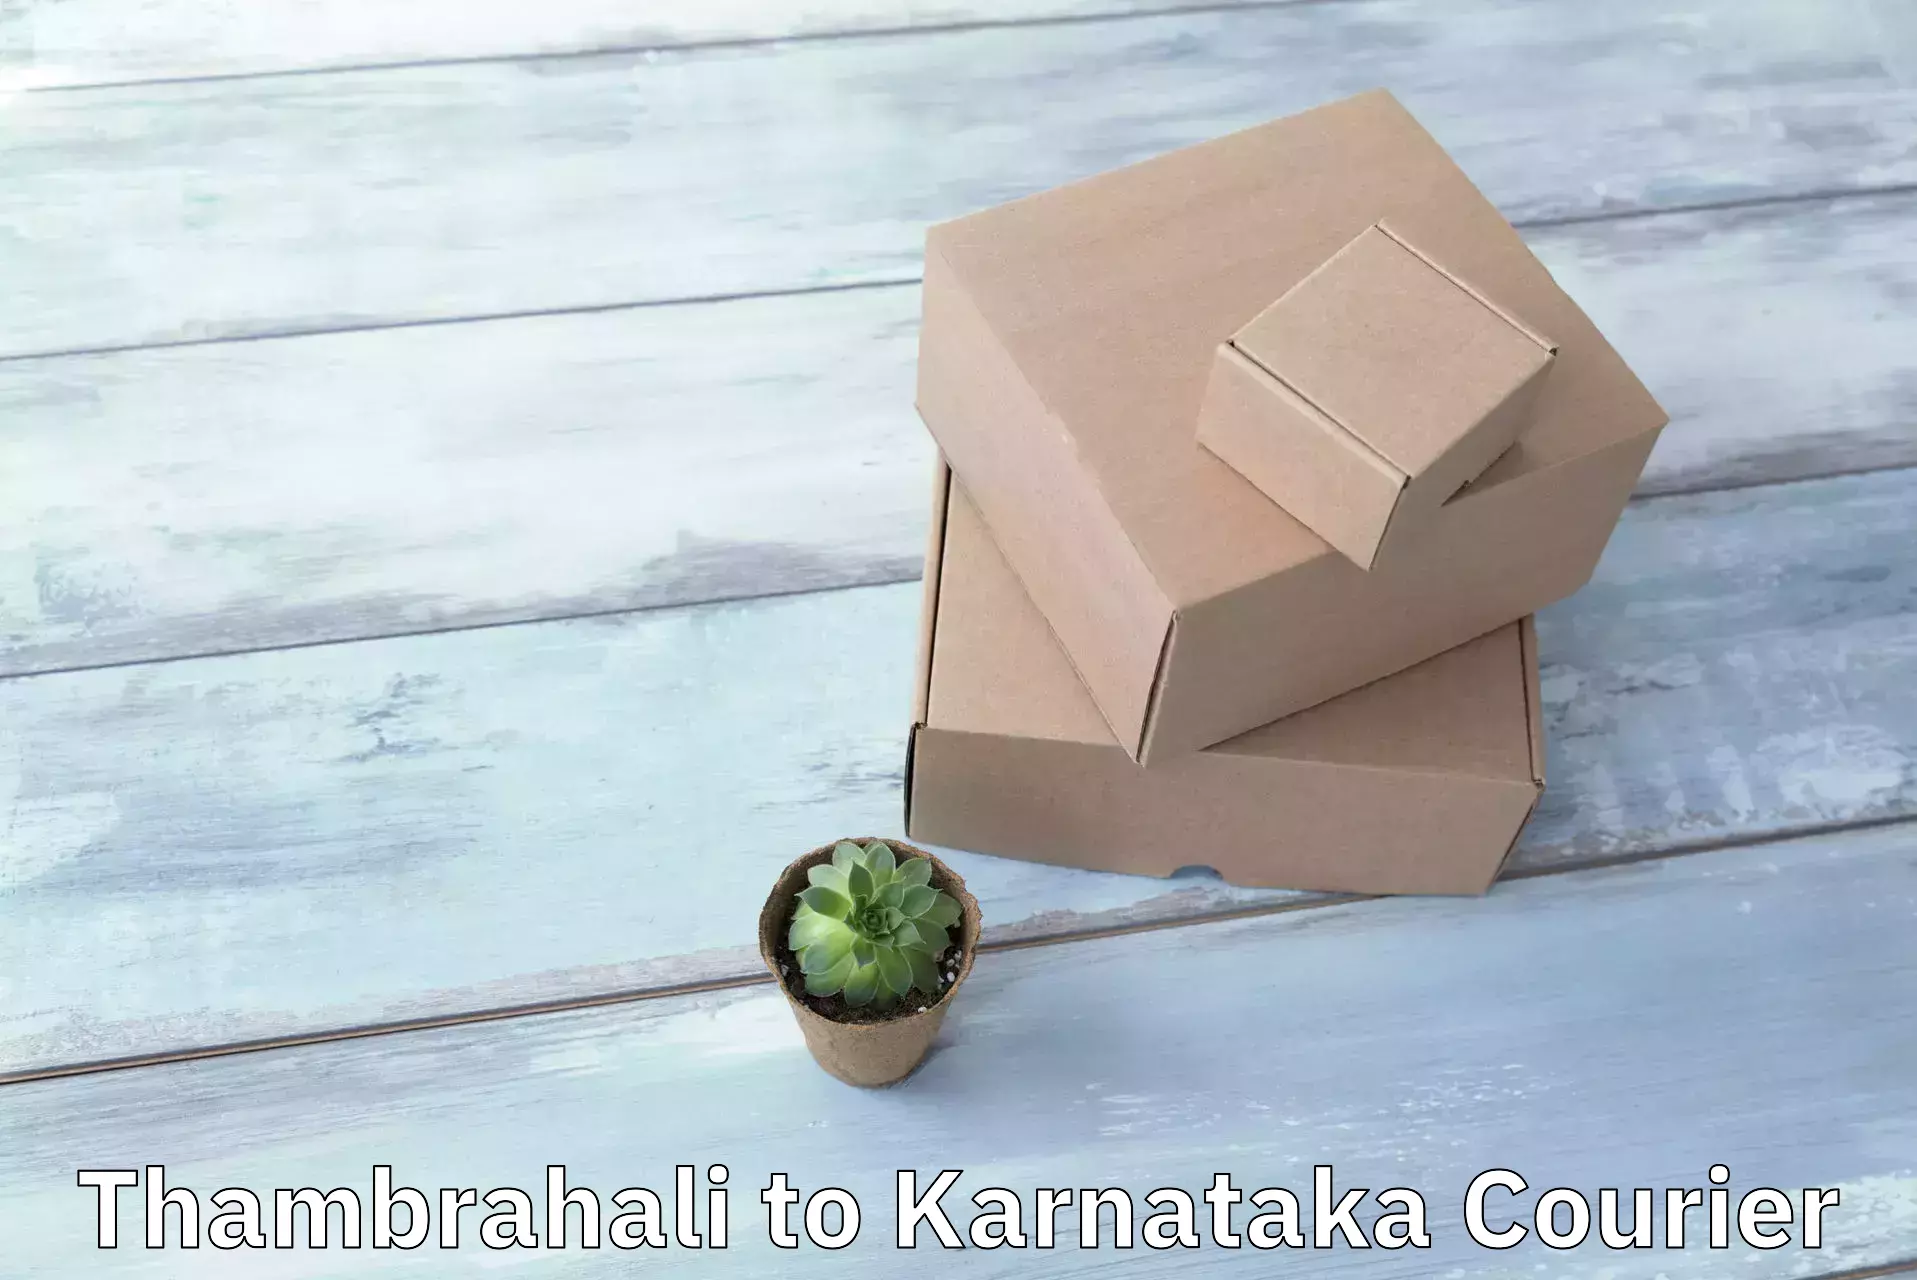 State-of-the-art courier technology Thambrahali to Karnataka